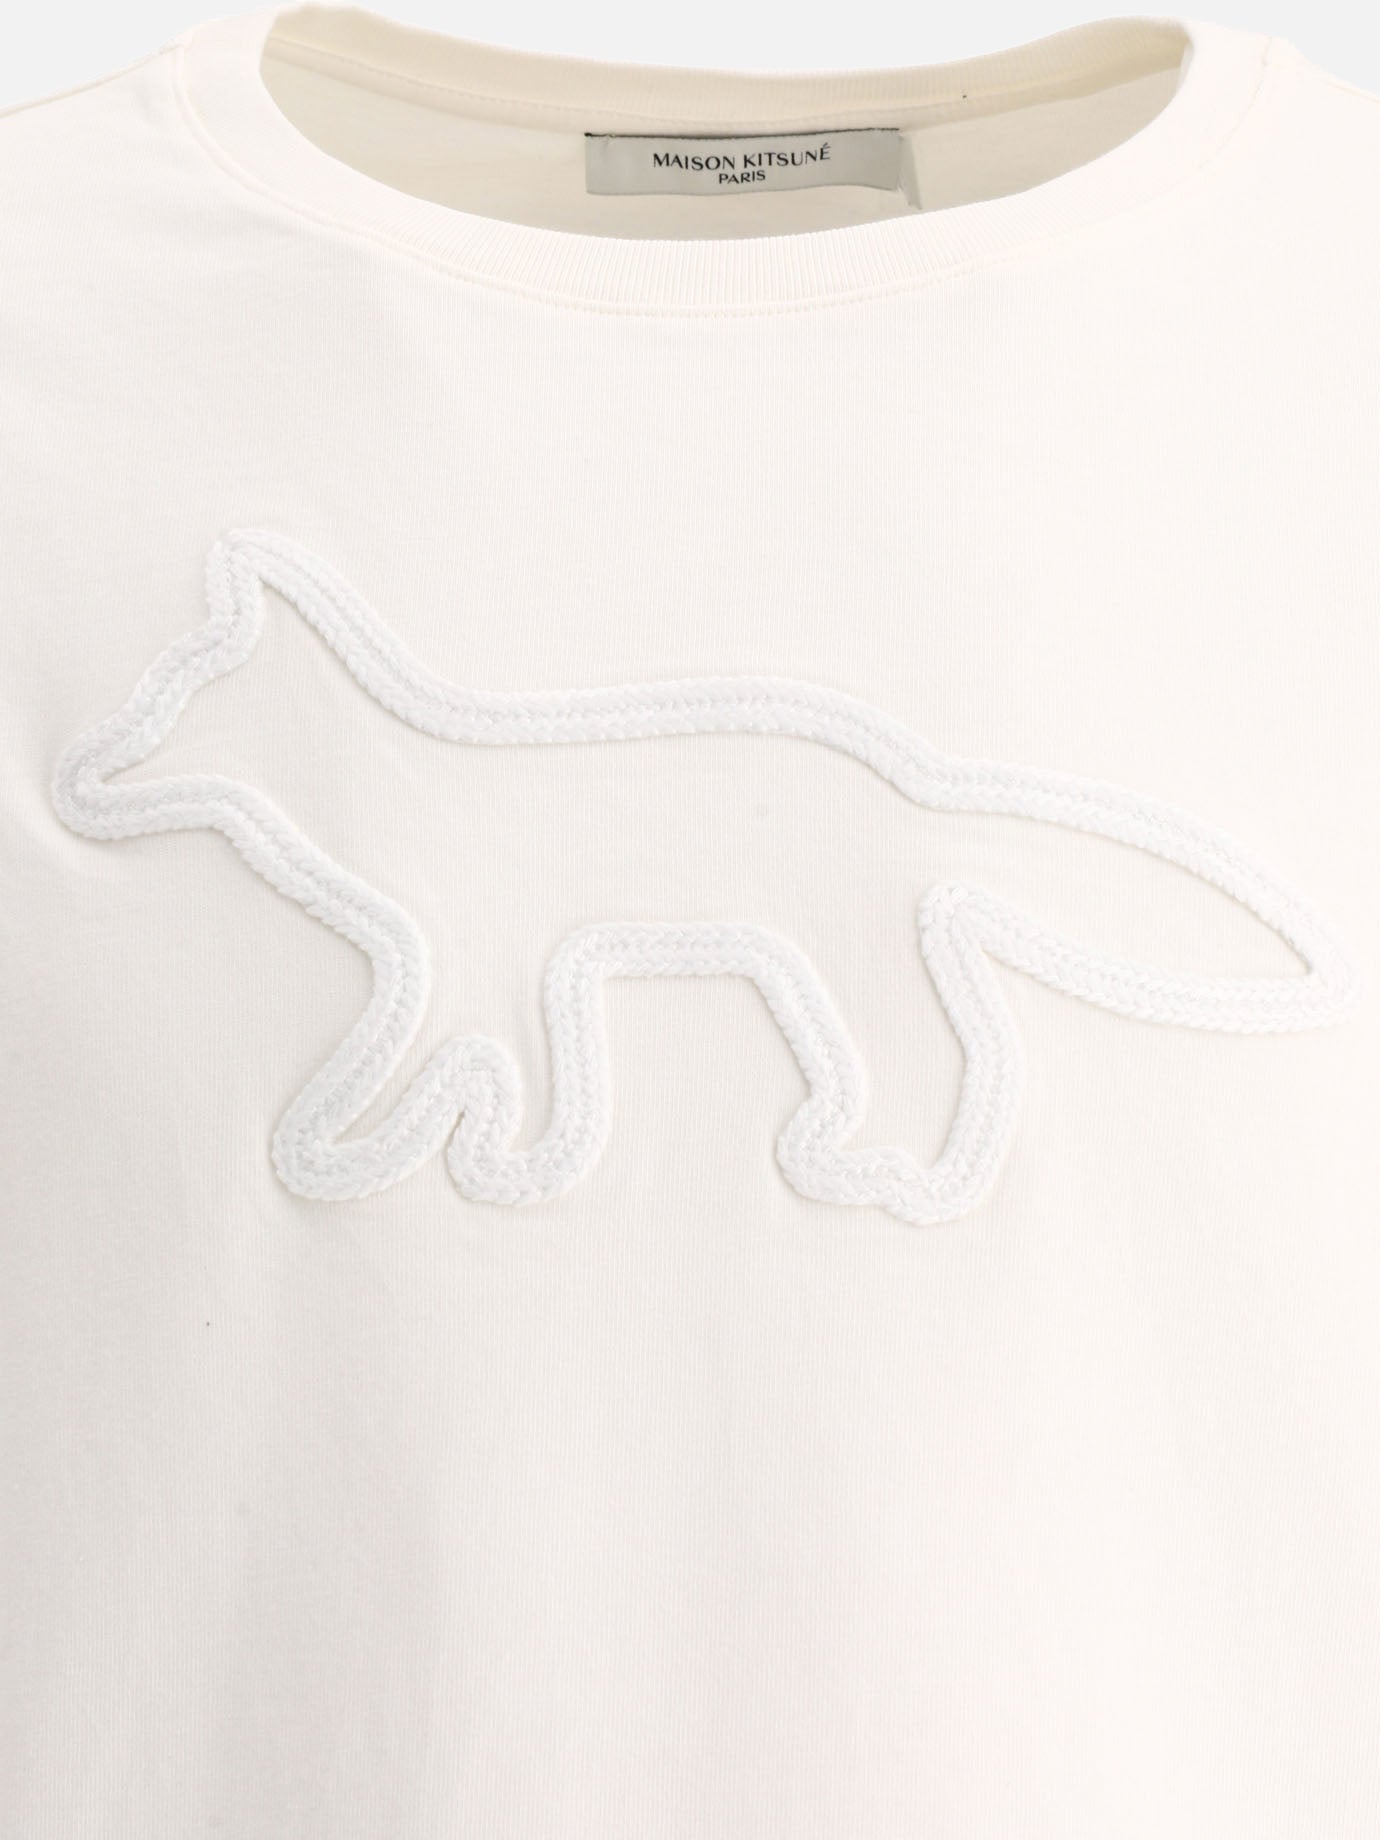 "Contour Fox" t-shirt